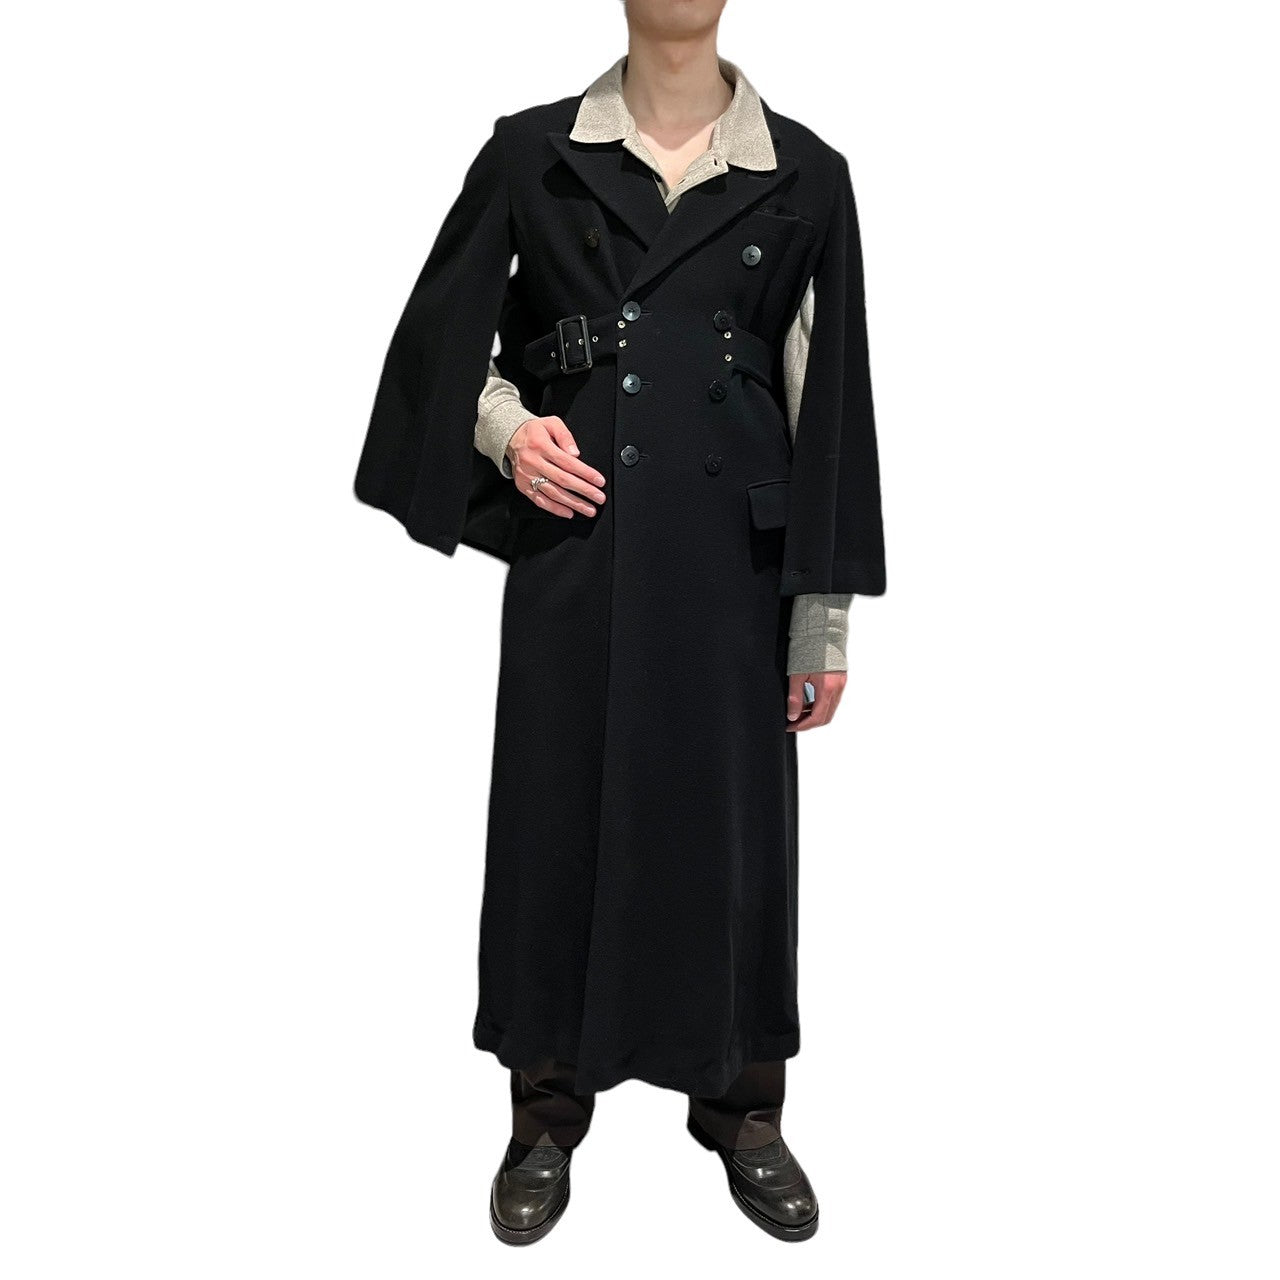 Jean Paul GAULTIER FEMME(ジャンポールゴルチエファム) 90’s ~ 00's double-breasted cloak  wool long coat ダブル チェスター マント ウール スーパー ロング コート 570-5.CO.YG.SA.1424 40(L程度)  